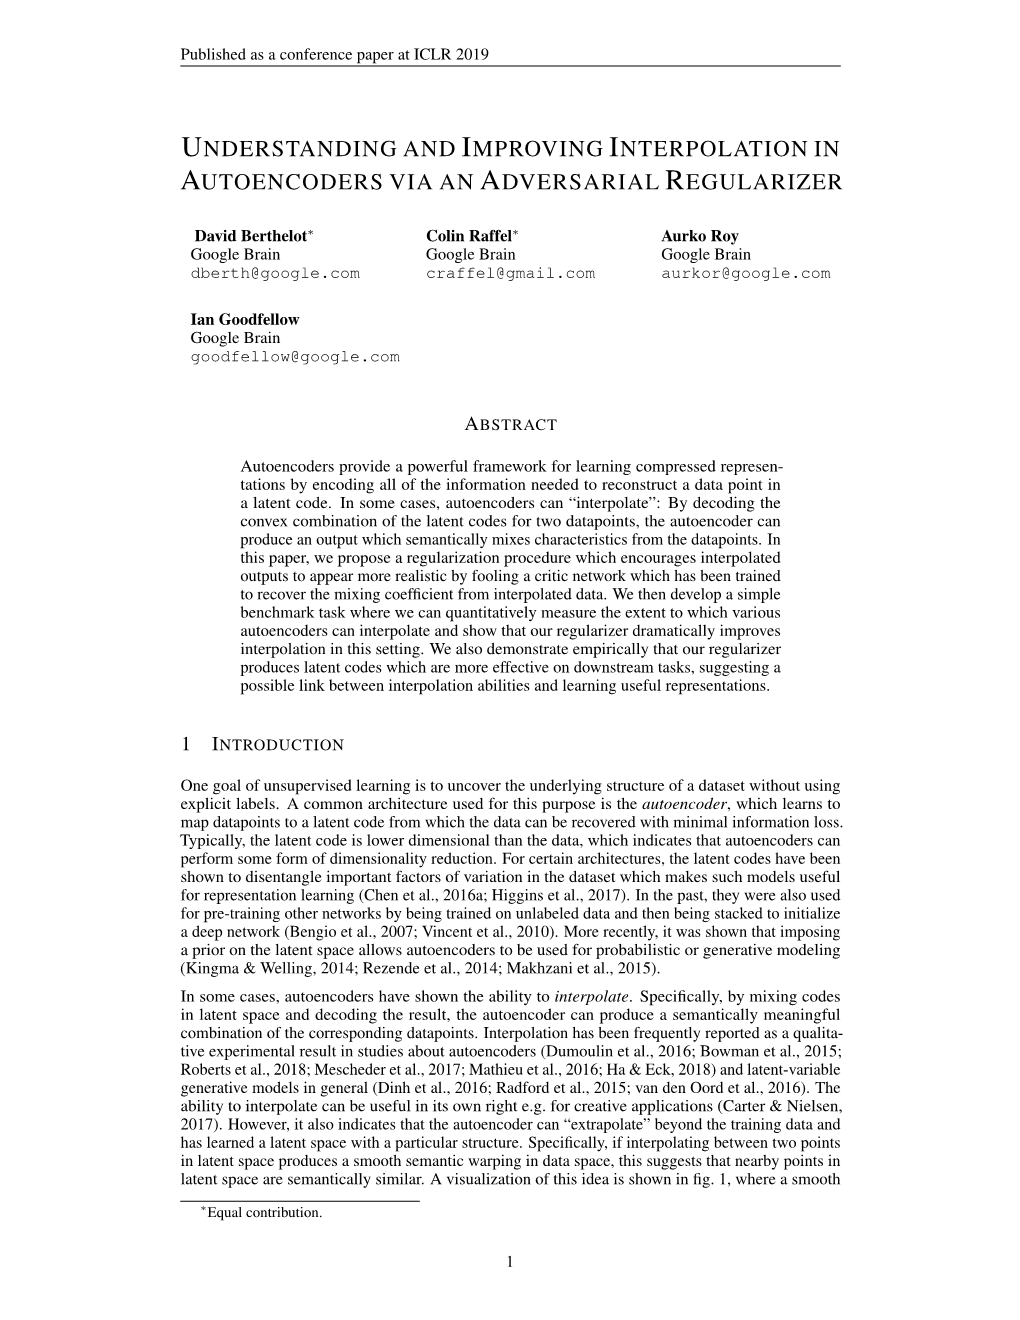 Understanding and Improving Interpolation in Autoencoders Via an Adversarial Regularizer